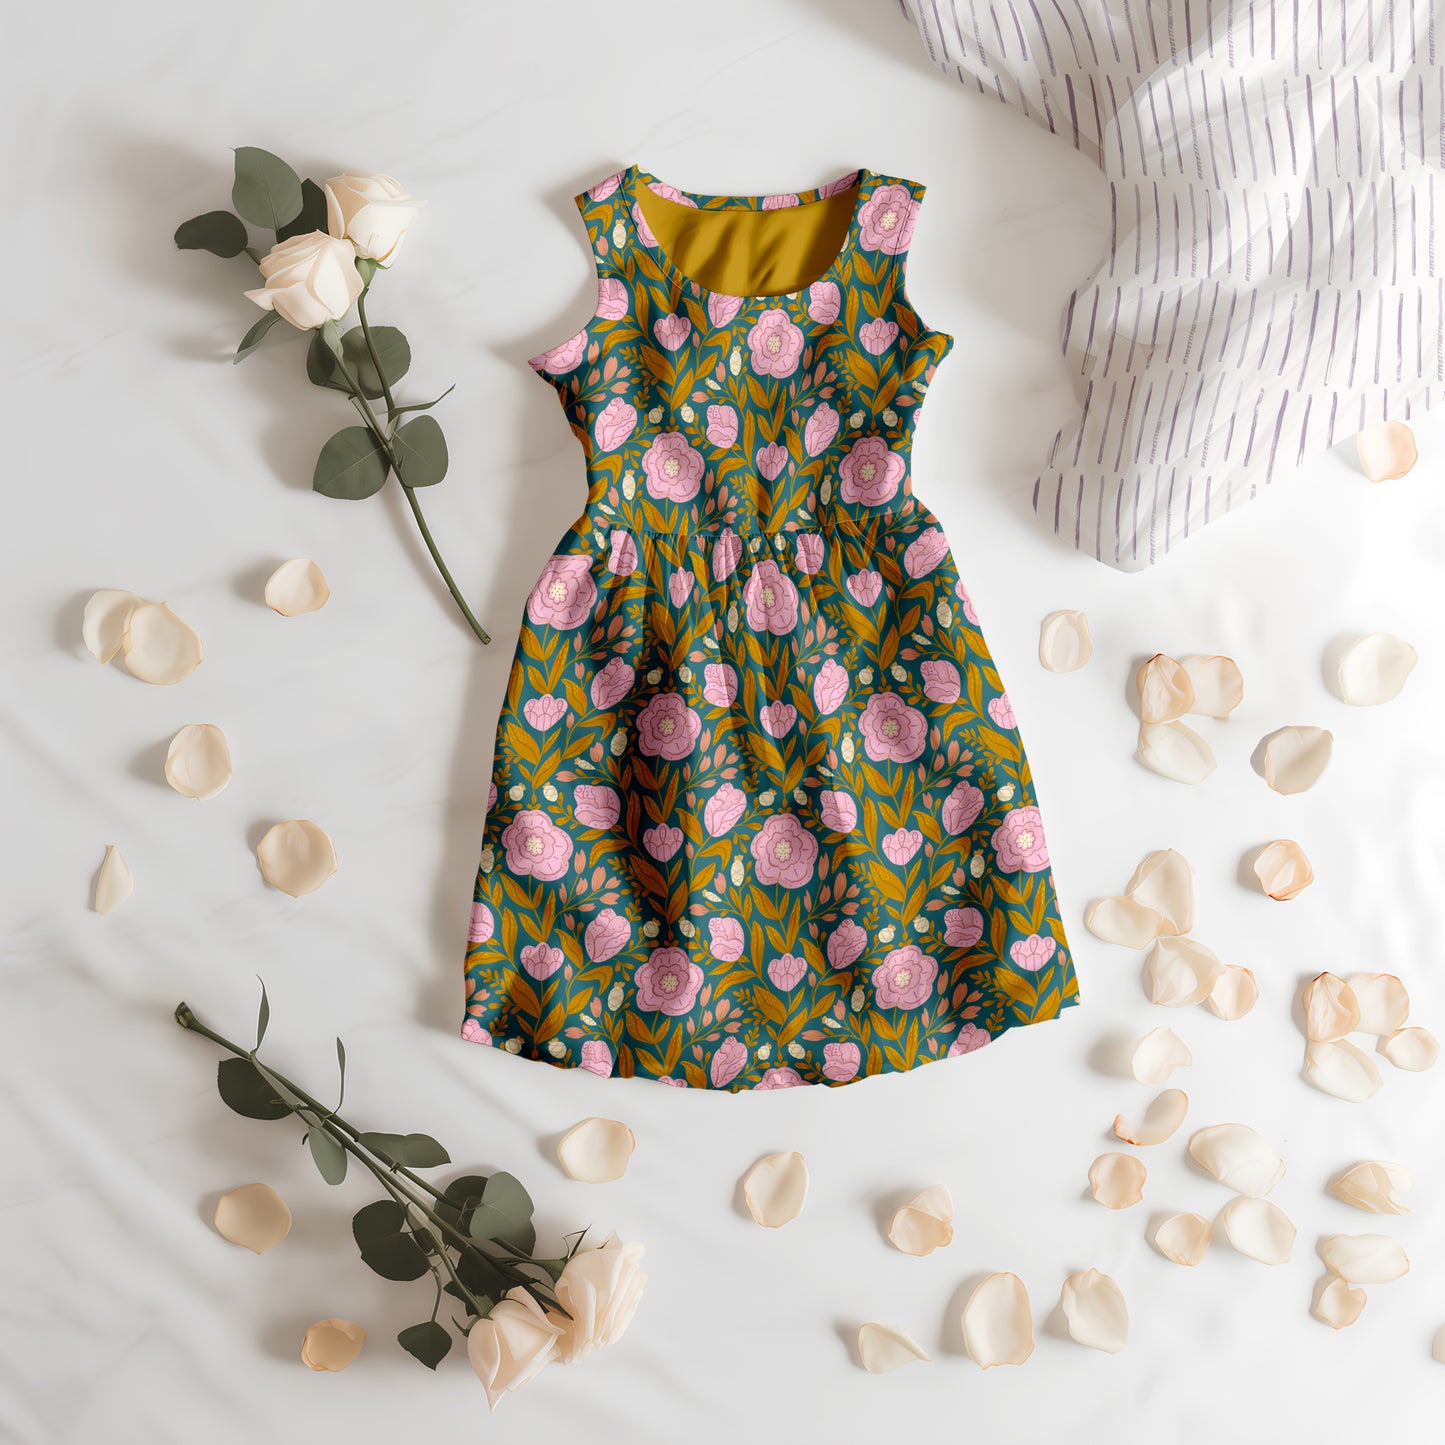 Child's dress & fabric mockup – minimalistic spring & summer theme